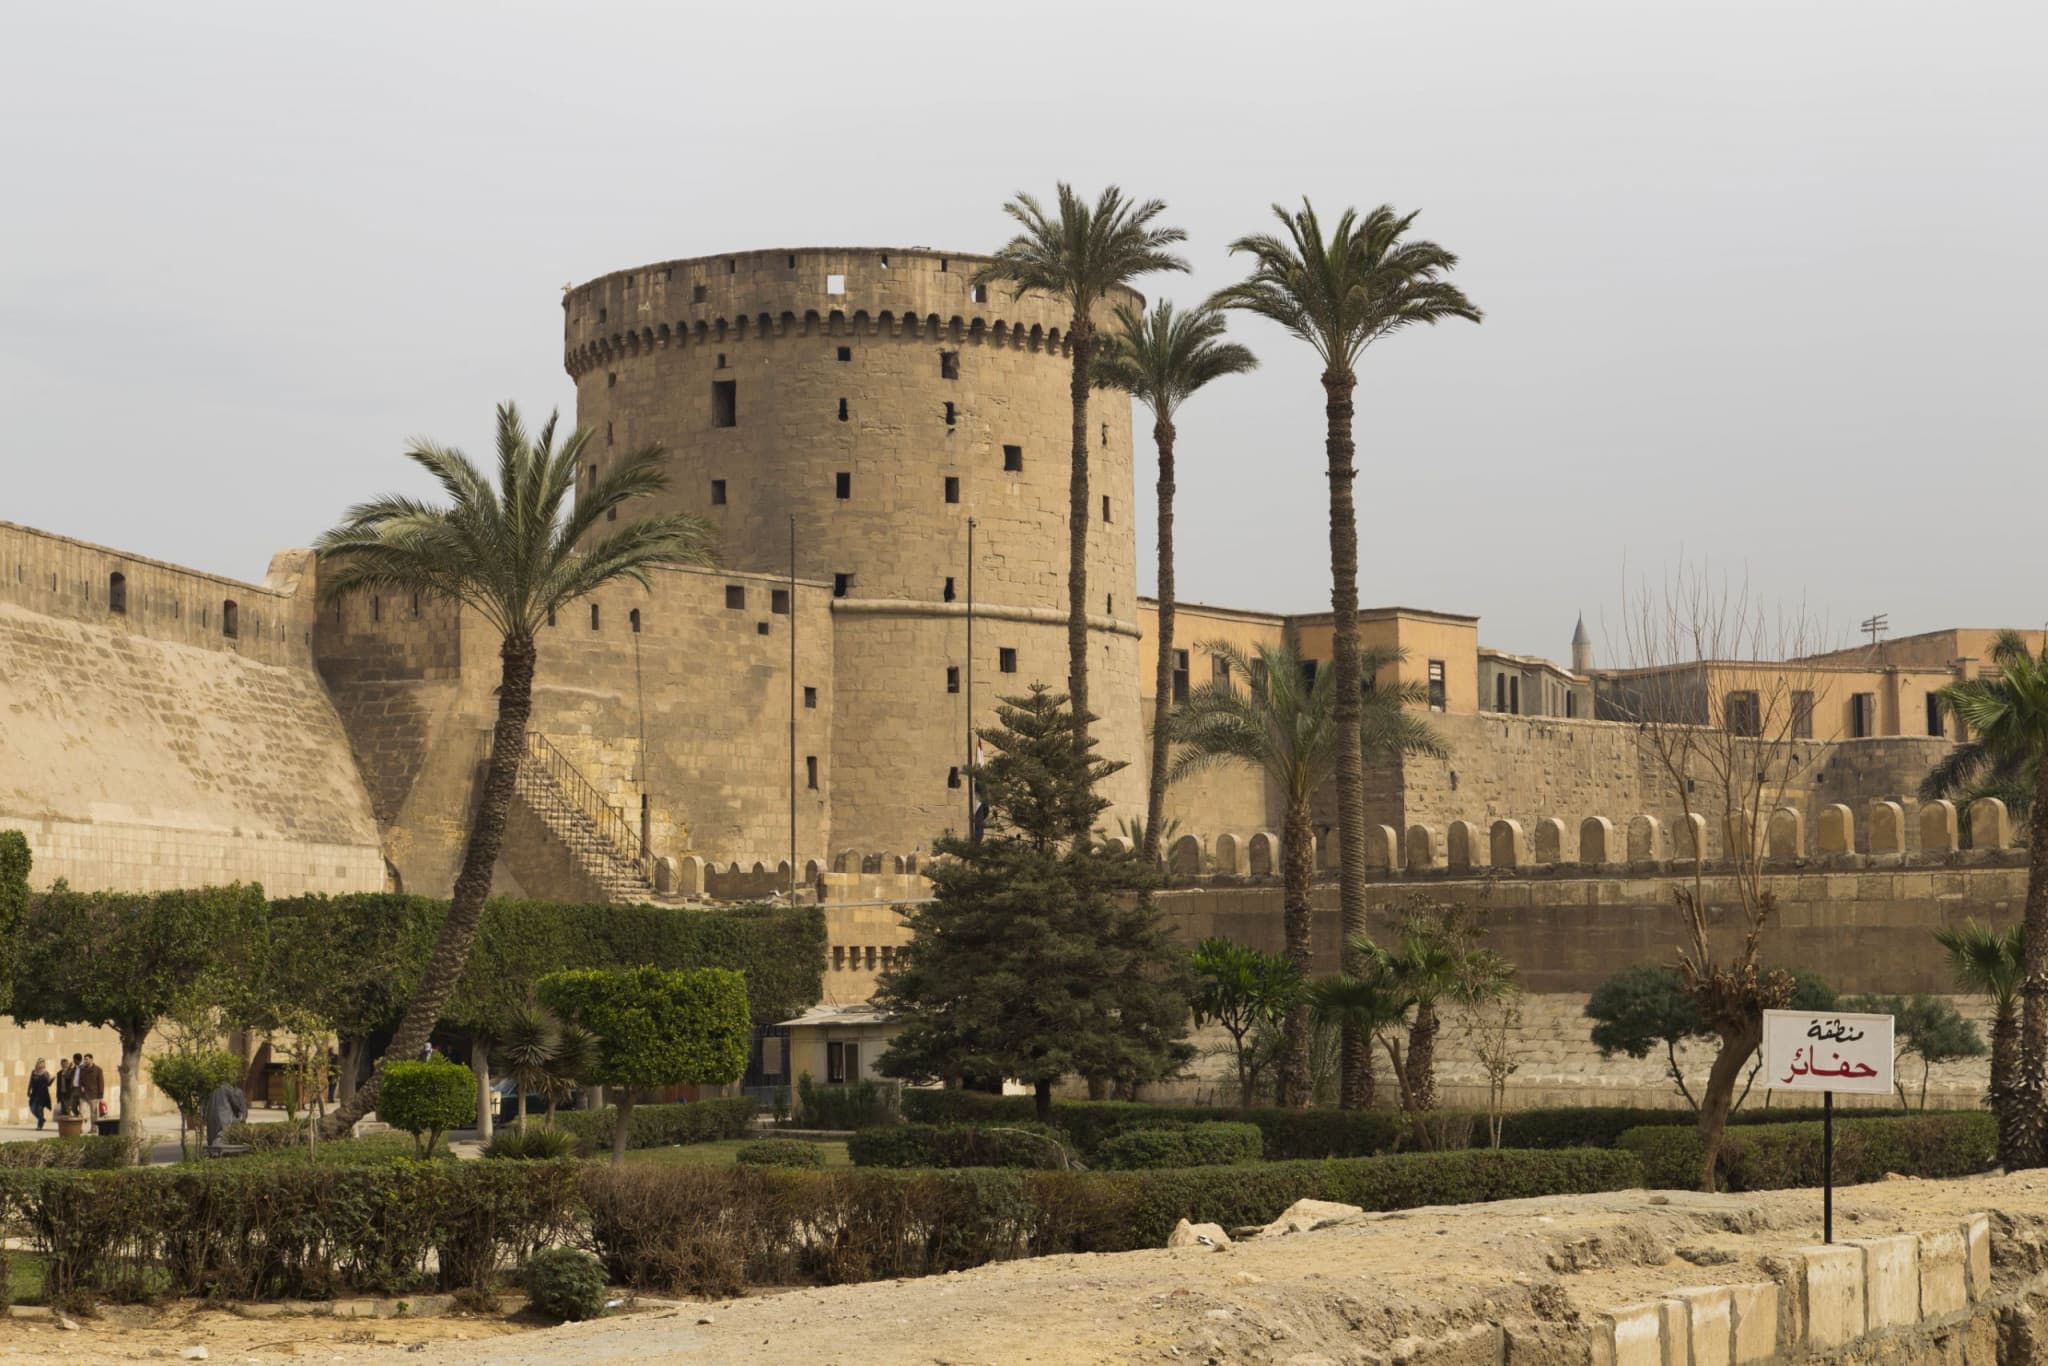 IMG_9991-egypt-cairo-citadel-bab-zuweila-al-azhar-park-001